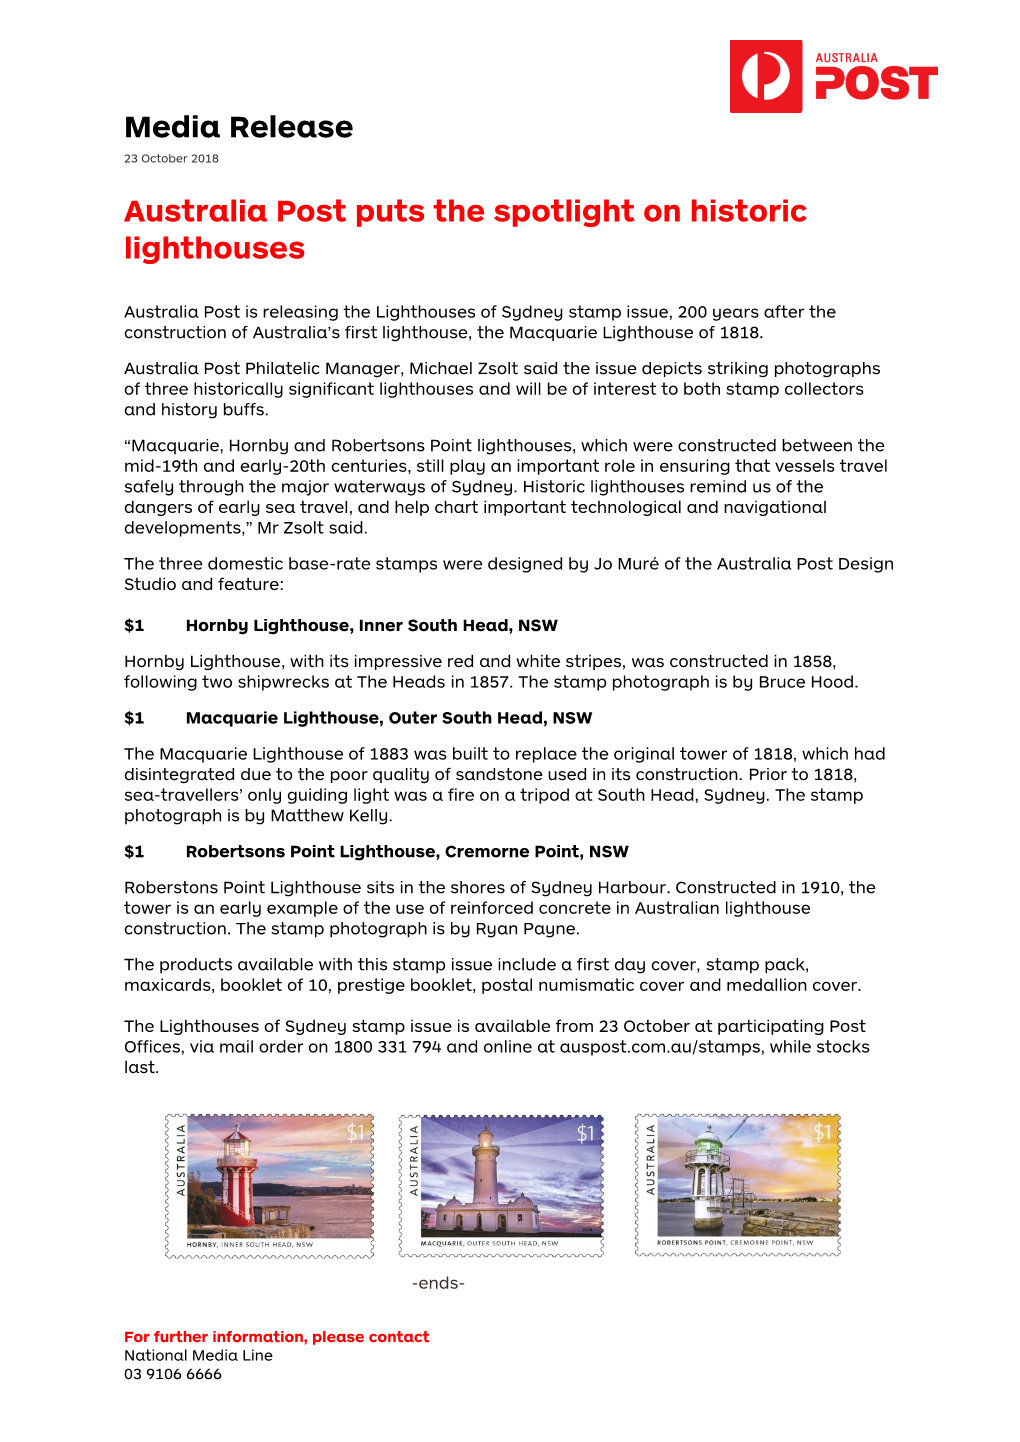 Media Release Australia Post Puts the Spotlight on Historic Lighthouses